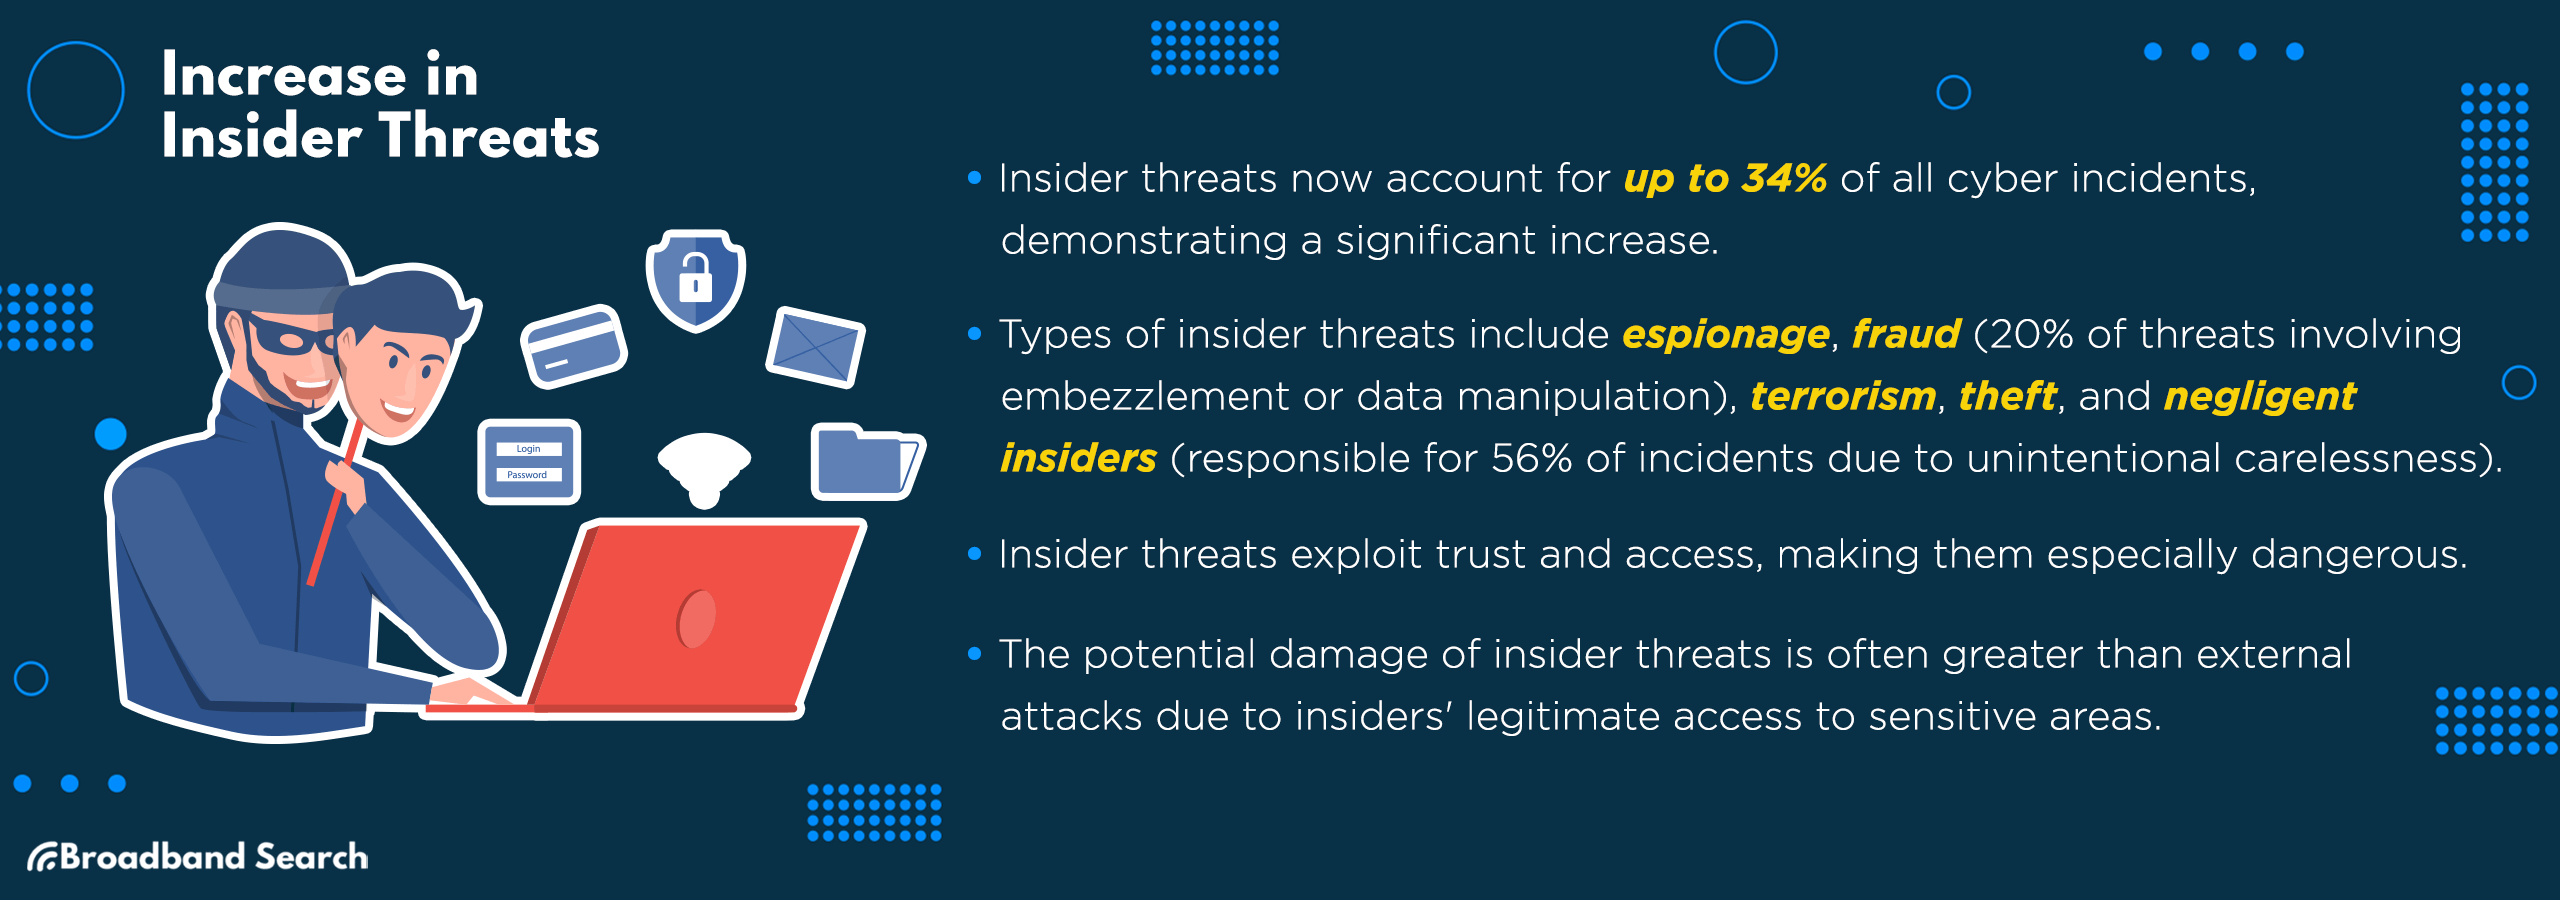 Data on increase in insider threats